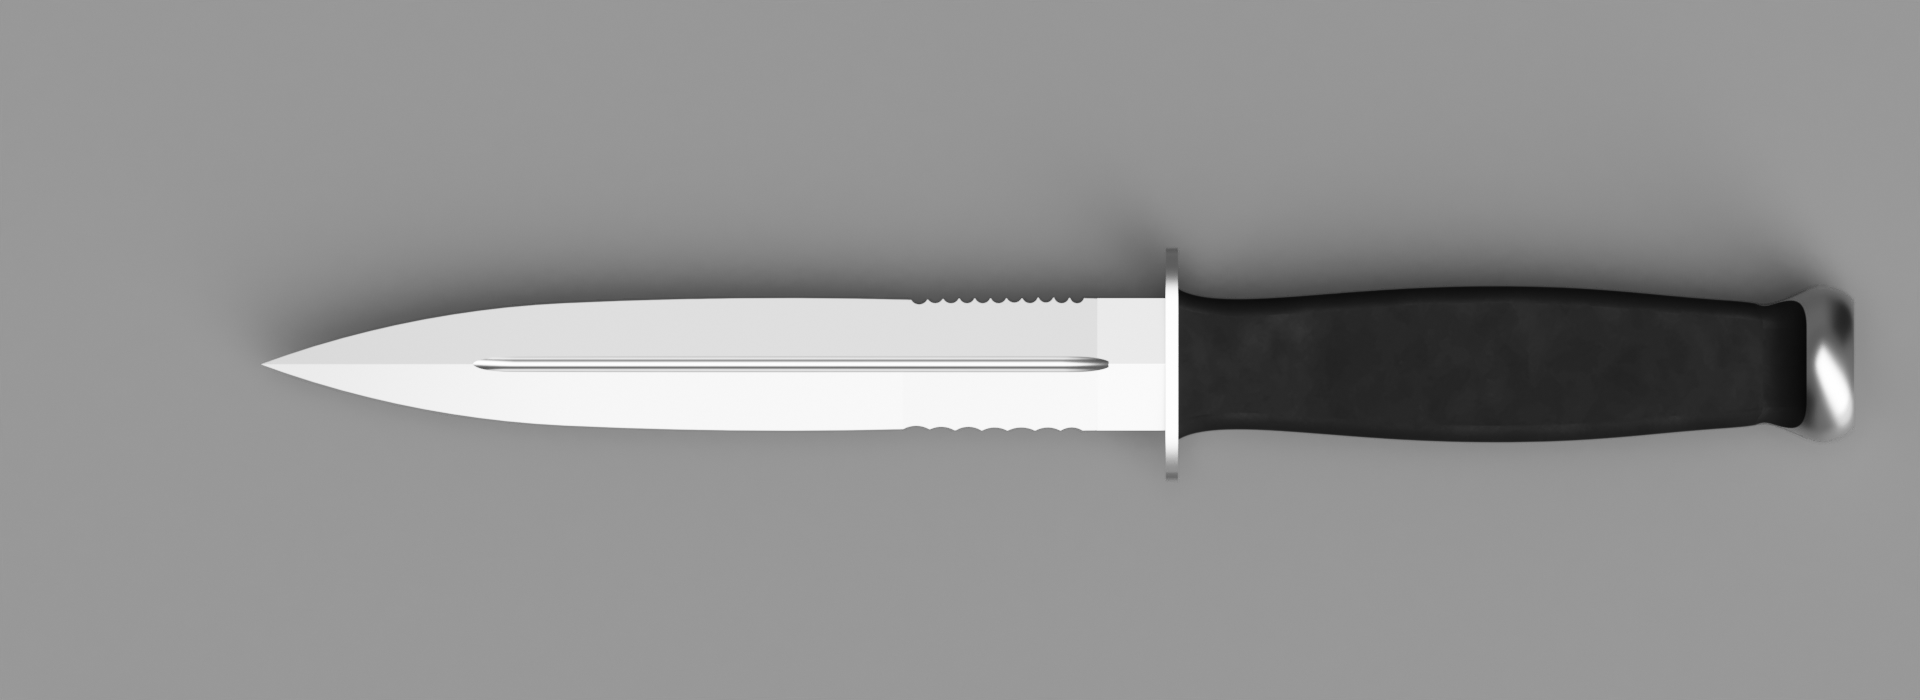 deadpool knife 3D Models to Print - yeggi